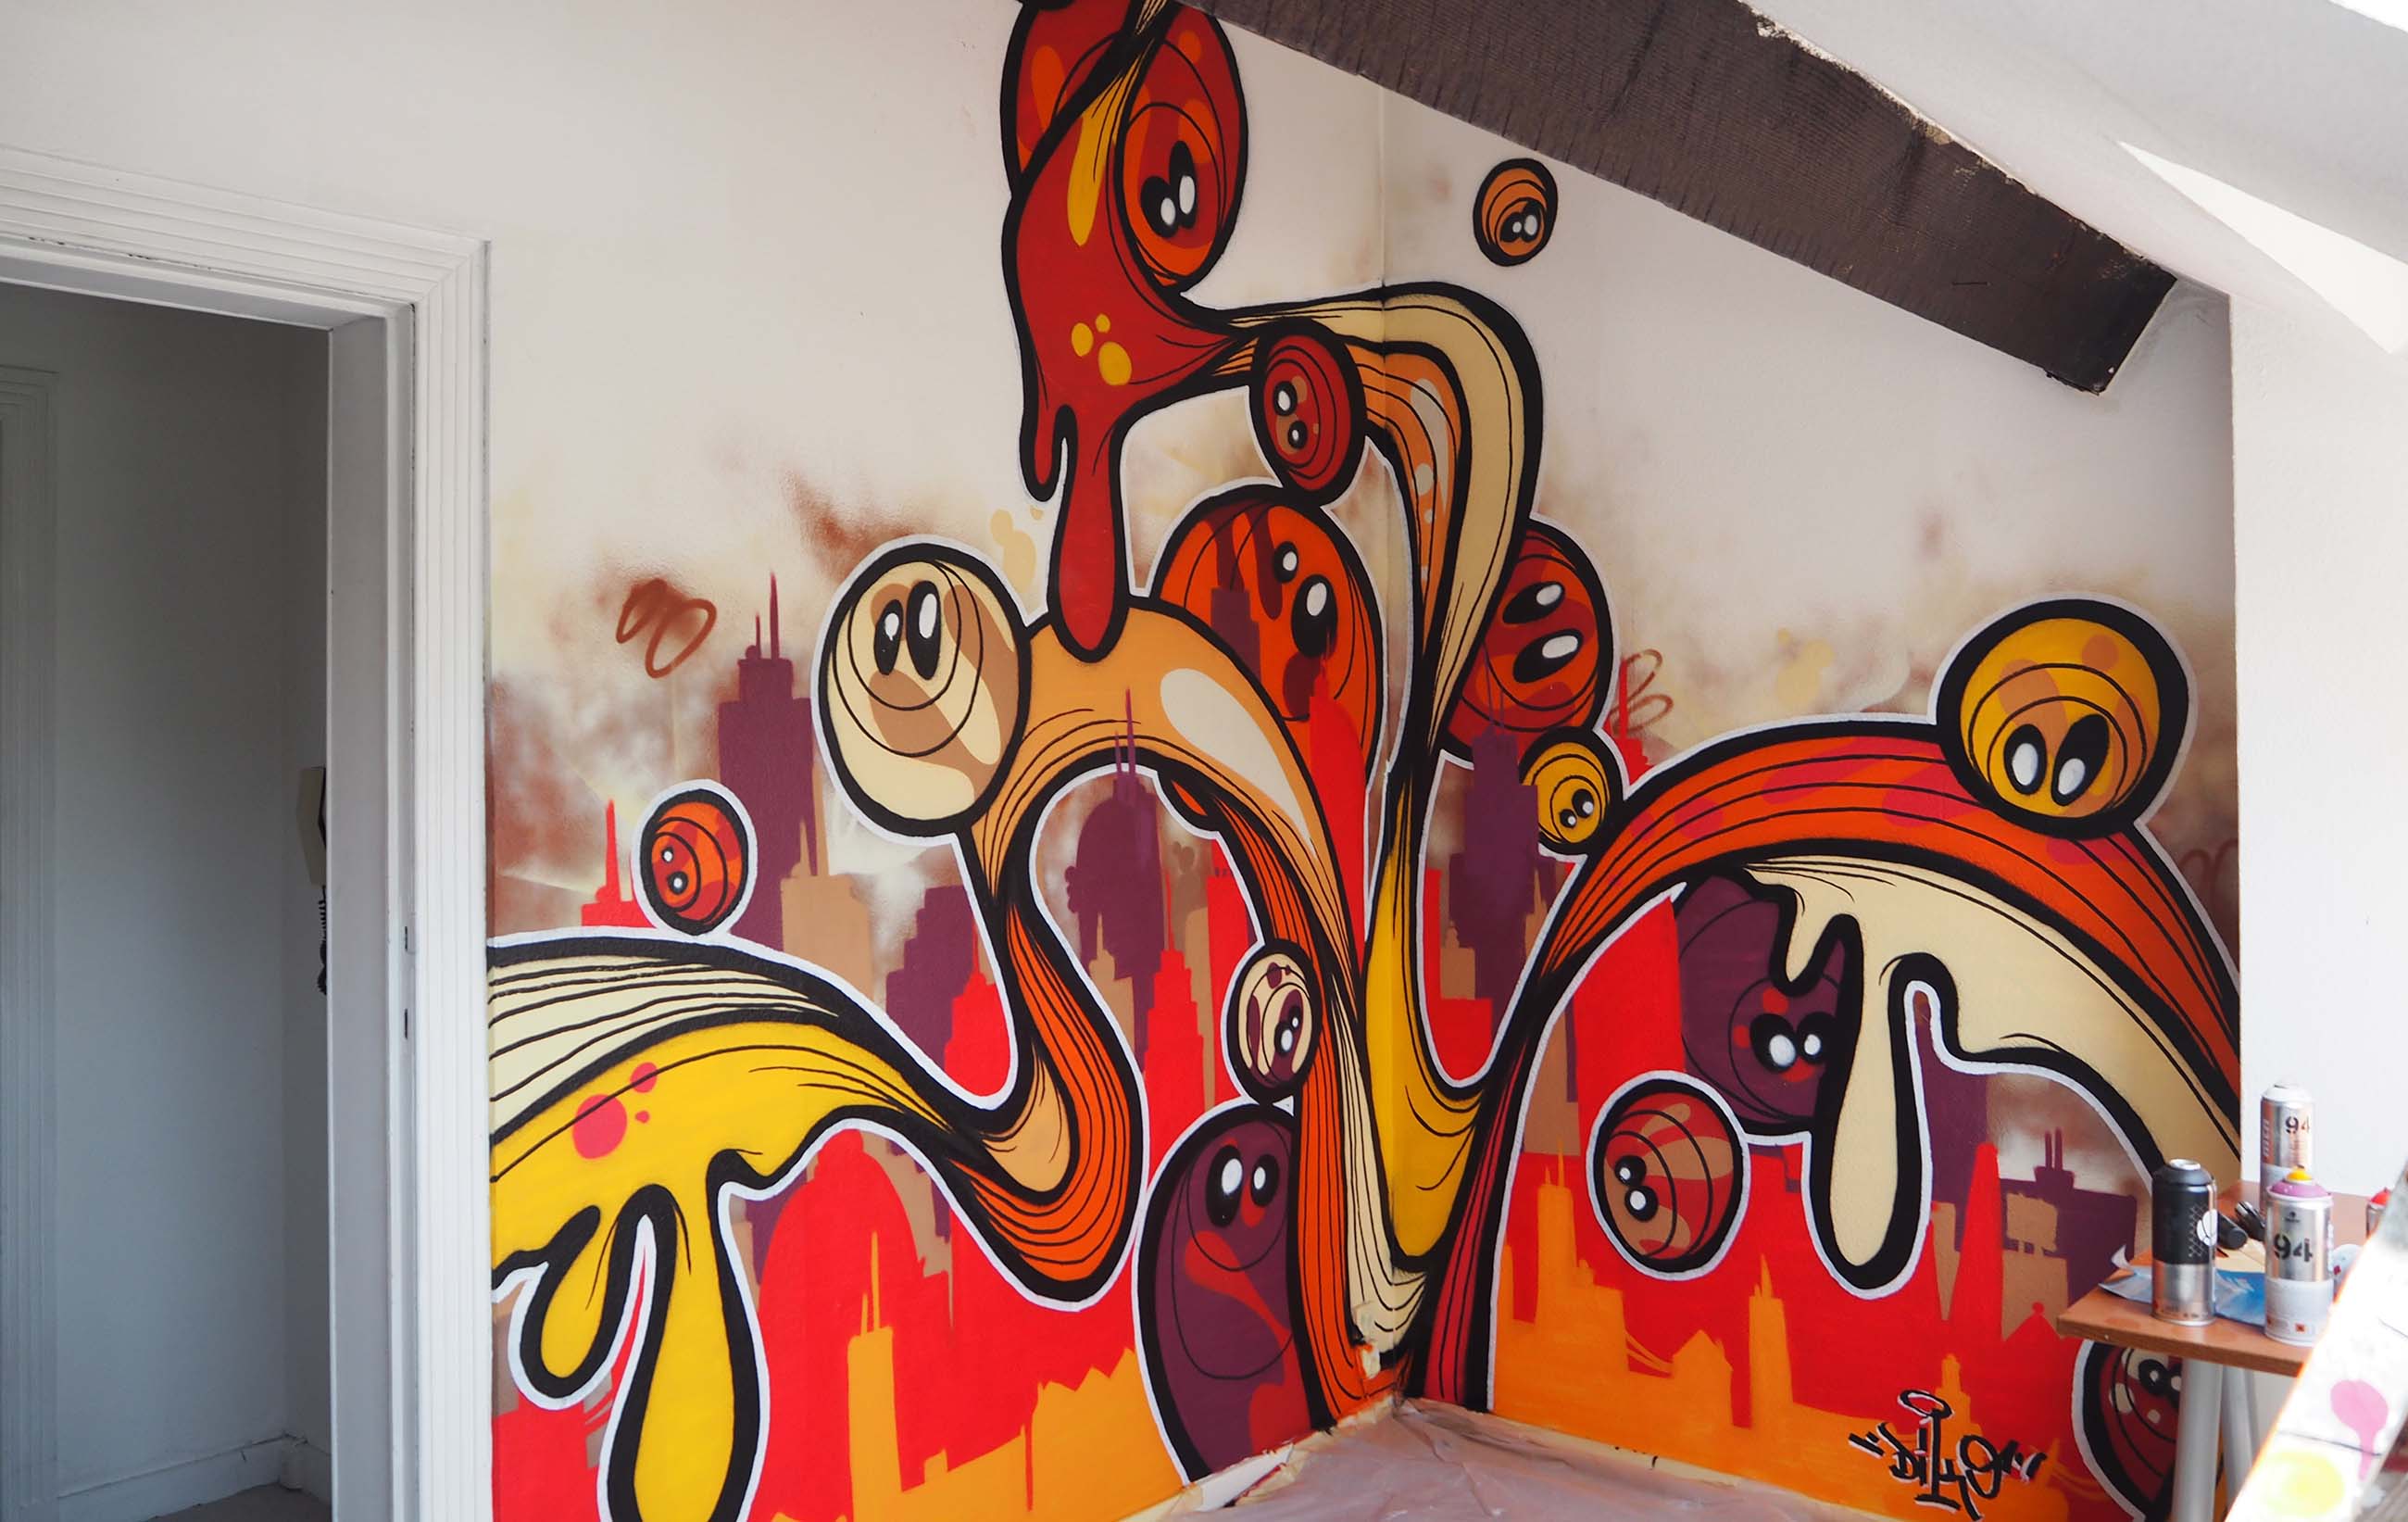 https://www.propaganza.be/wp-content/uploads/2019/04/diko-bubble-abstract-propaganza-urban-artist-graffiti-graff-street-art-spray-painting-belgique-2.jpg